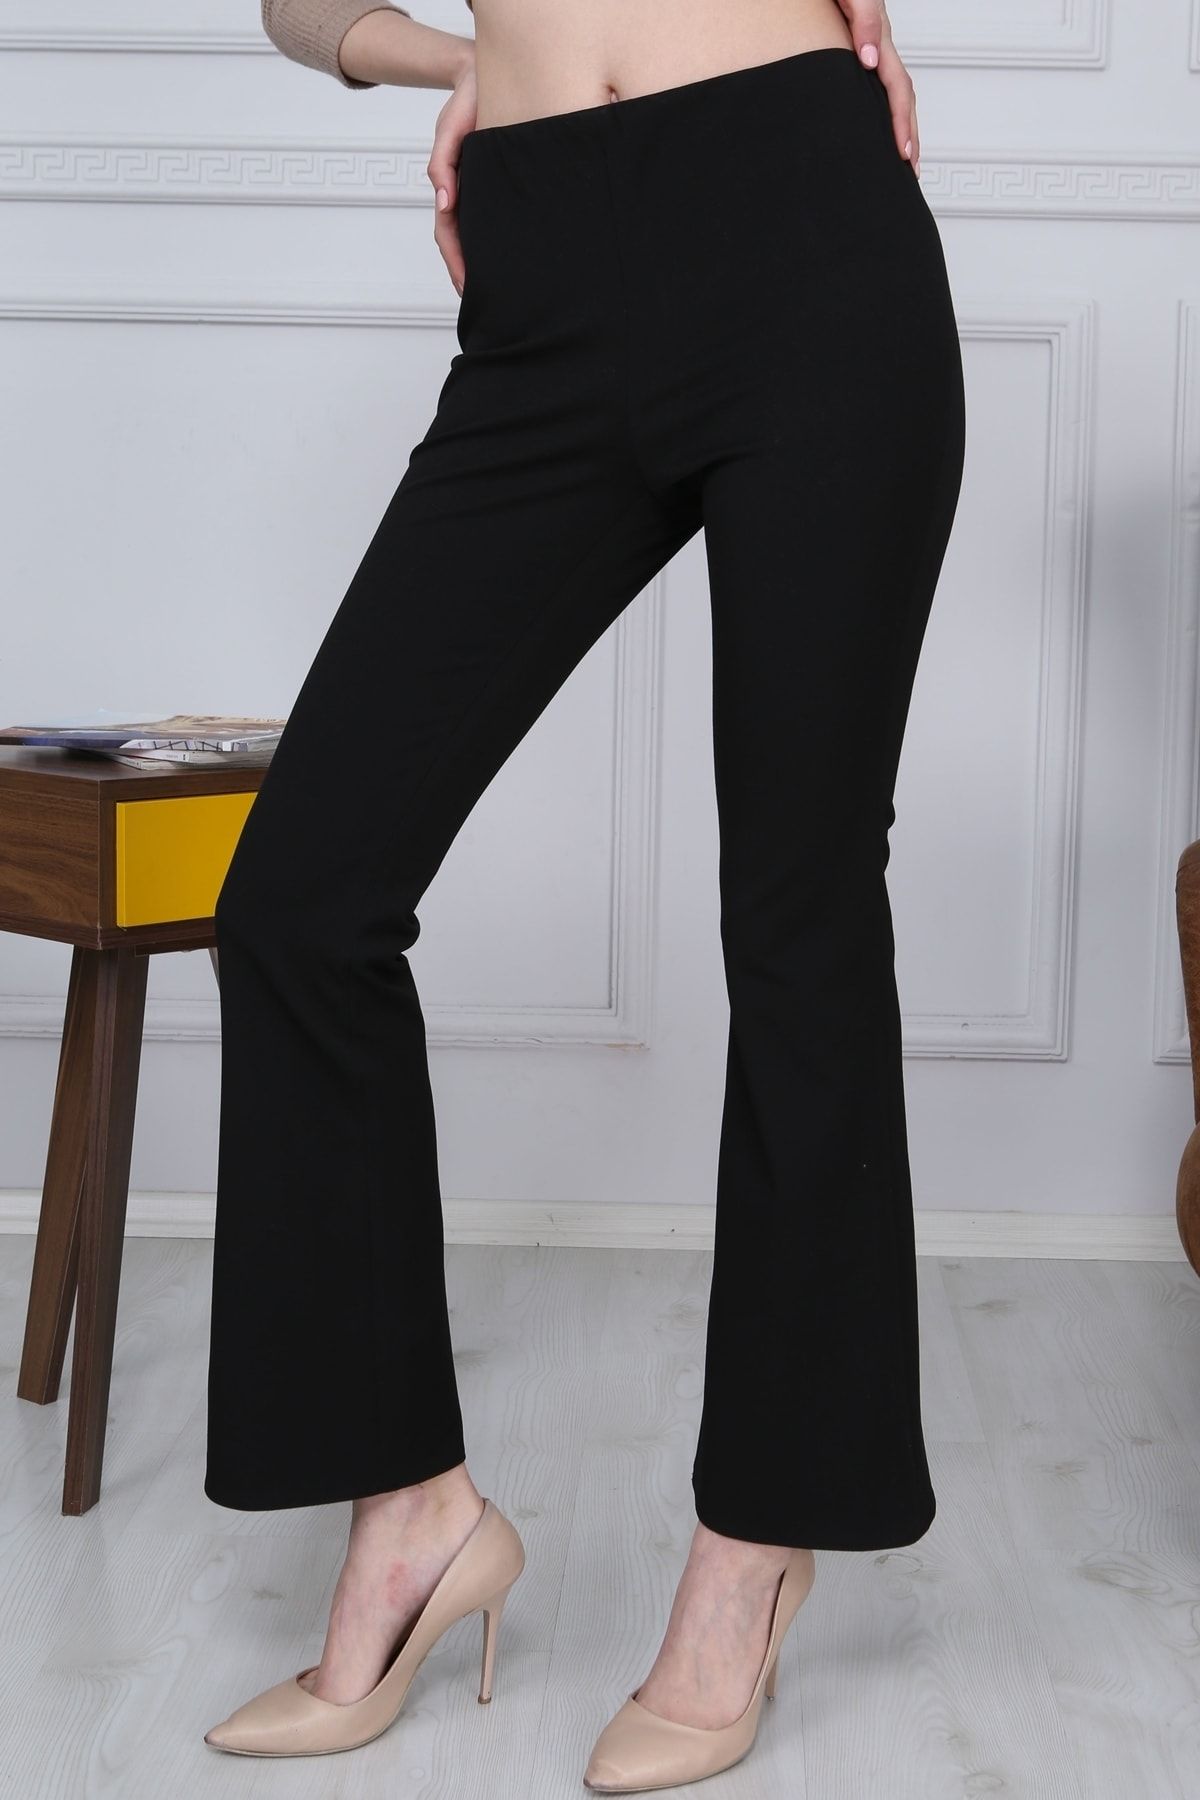 Gül Moda Ispanyol Paça Beli Lastikli Likralı Kumaş Pantolon Cepsiz Siyah